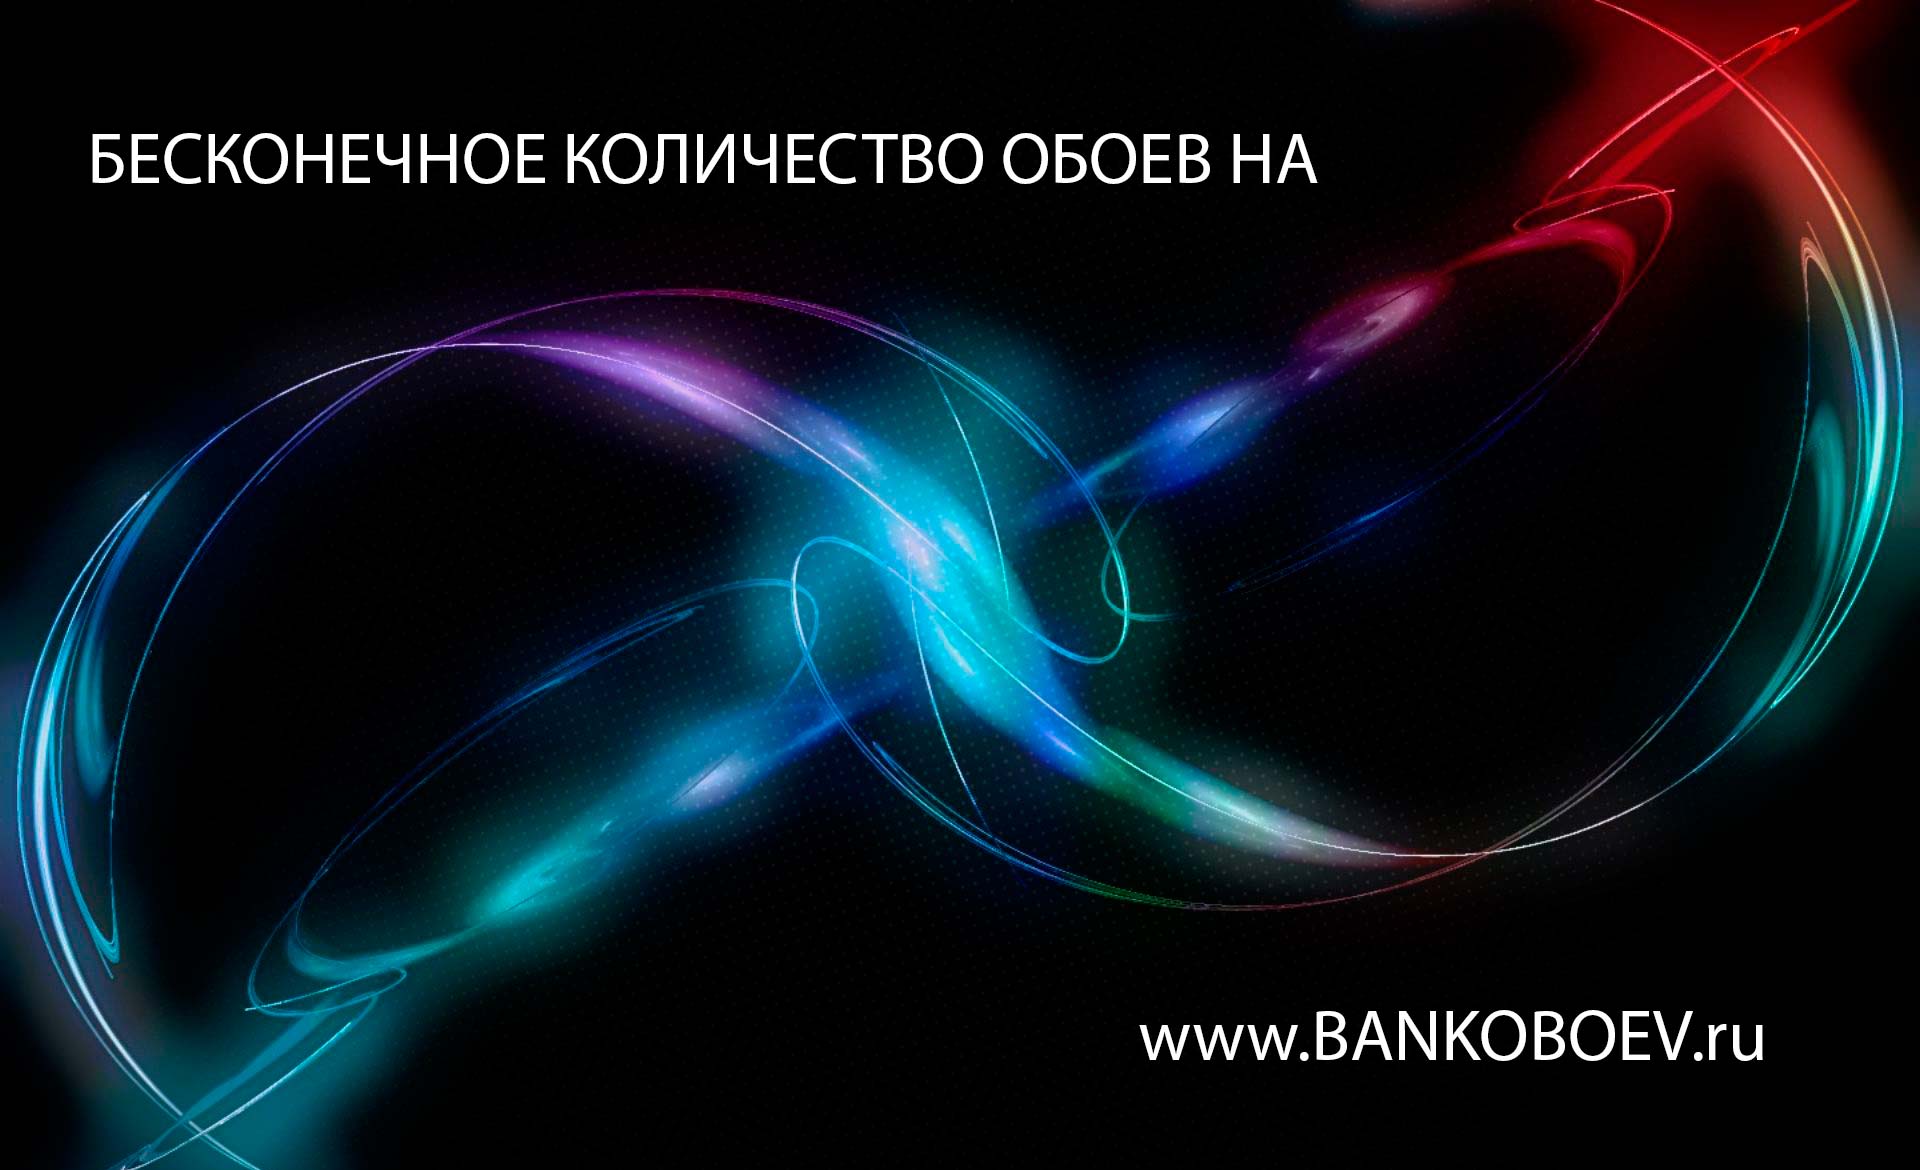 Bankoboev Ru Image Mzcxotm Jpg